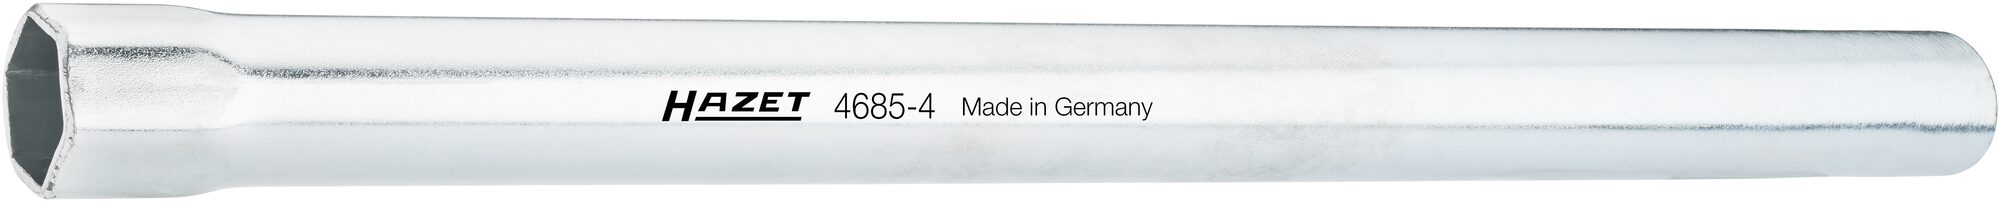 HAZET Rohr-Steckschlüssel 4685-4 · Vierkant hohl 12,5 mm (1/2 Zoll) · Außen Sechskant Profil · 24 mm